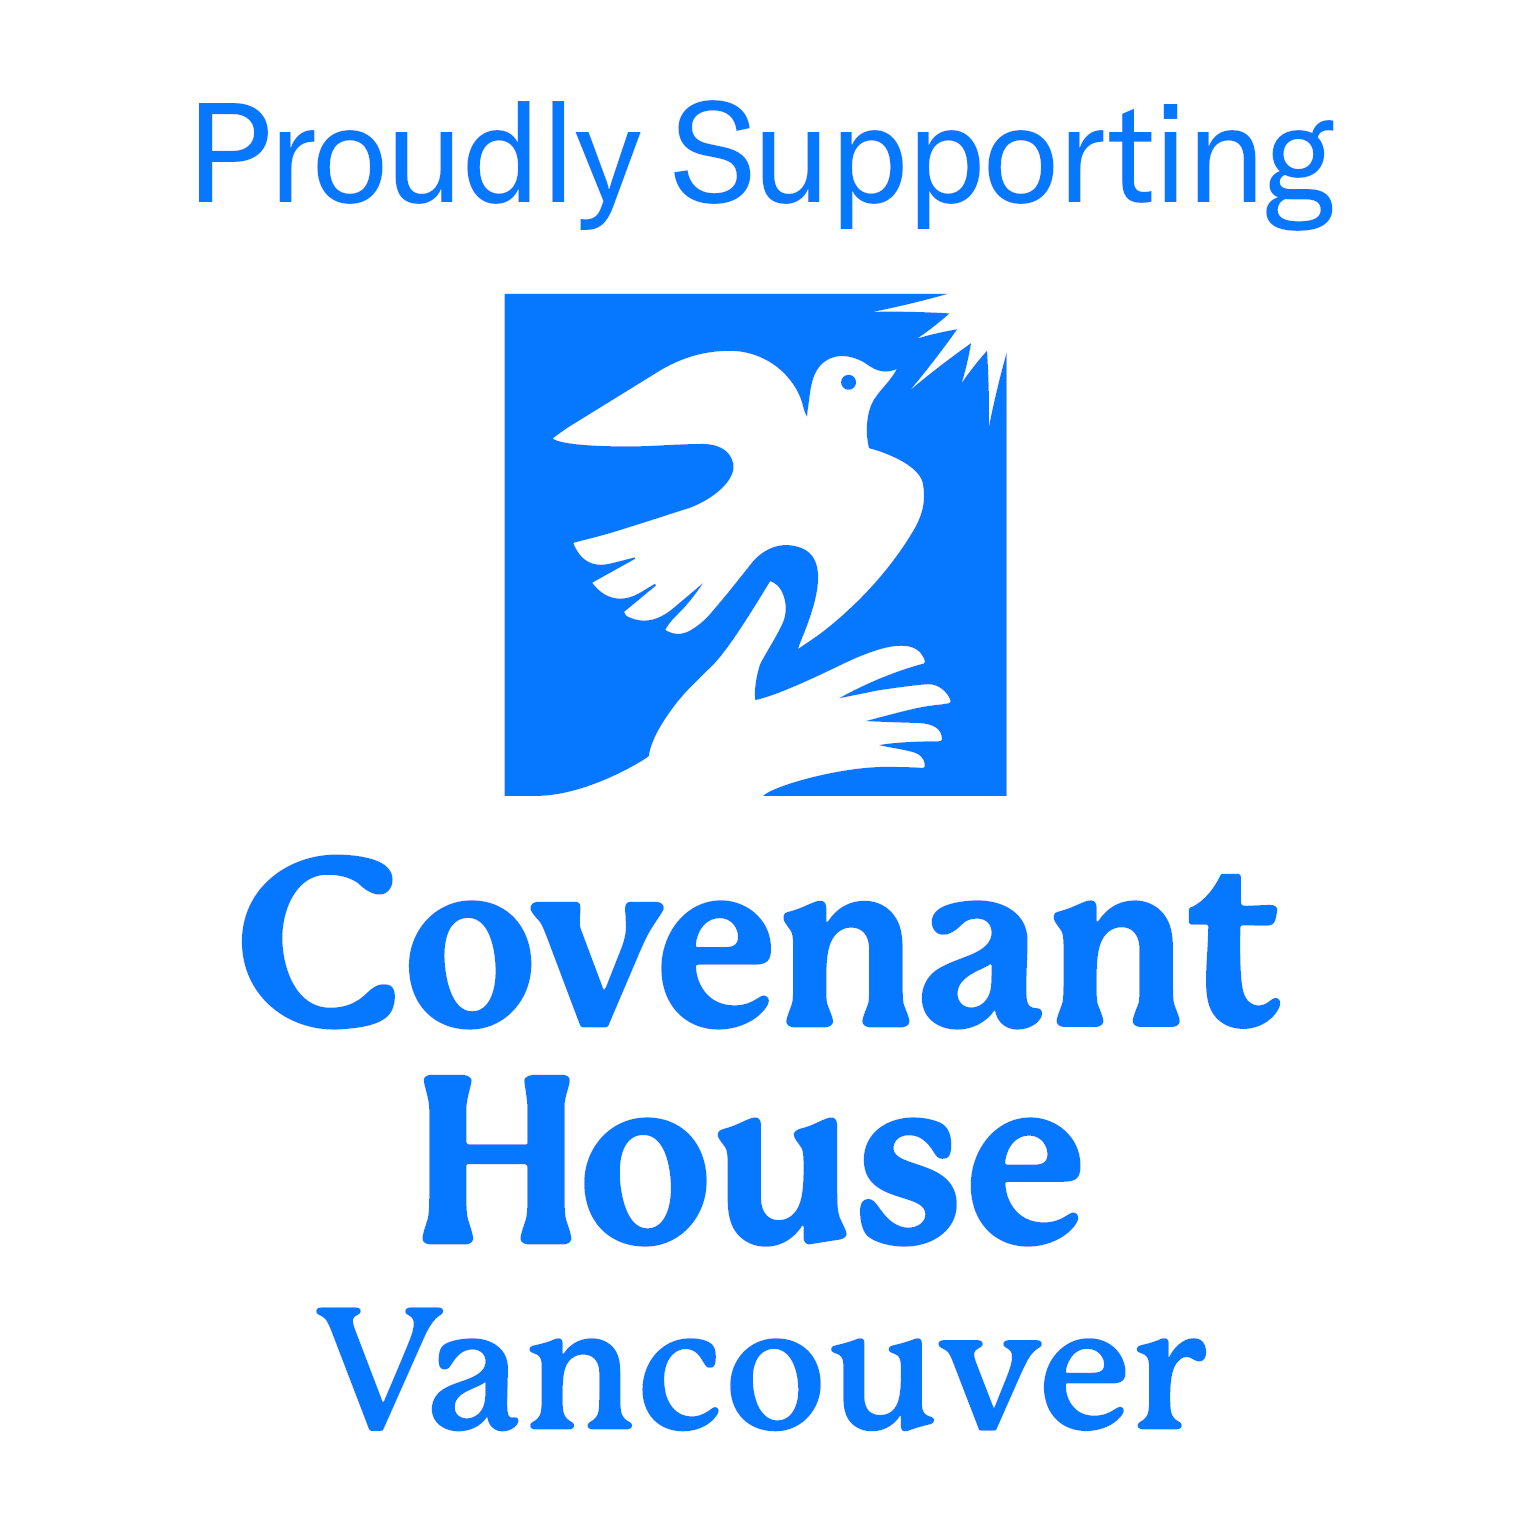 Indigenous Corporate Training Inc. donates $10,000 to Covenant House